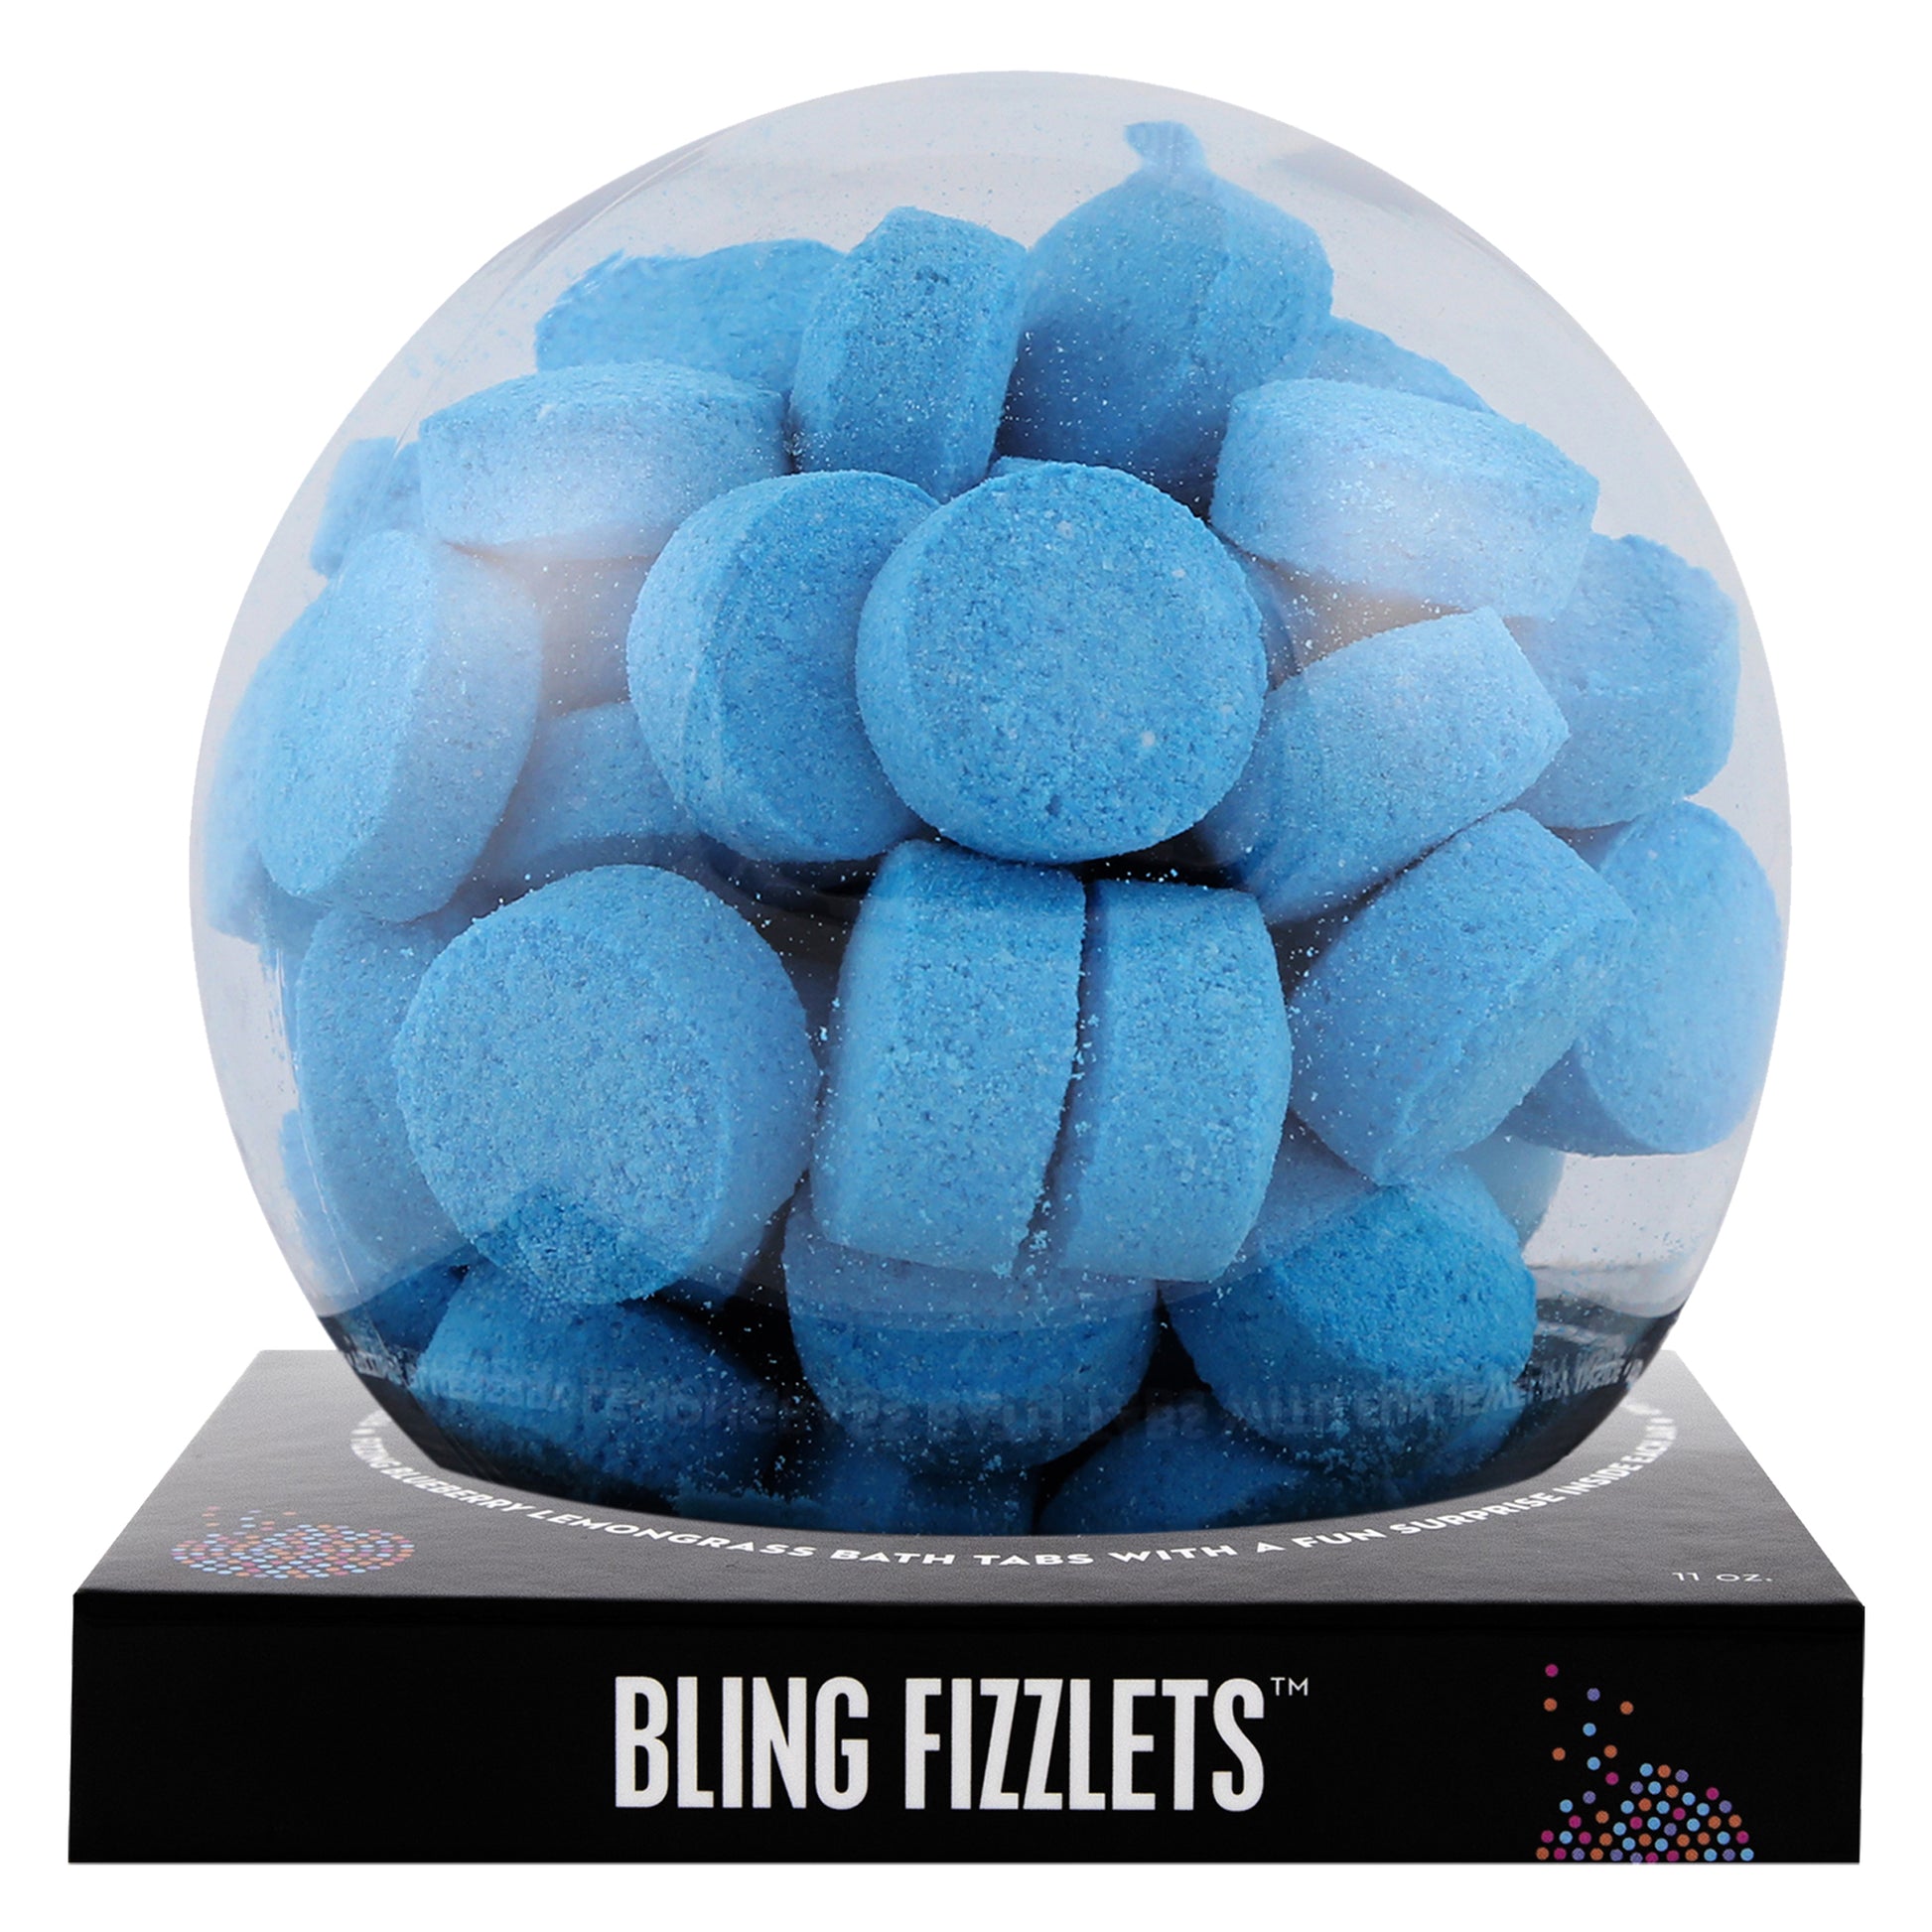 Bling Fizzlets™